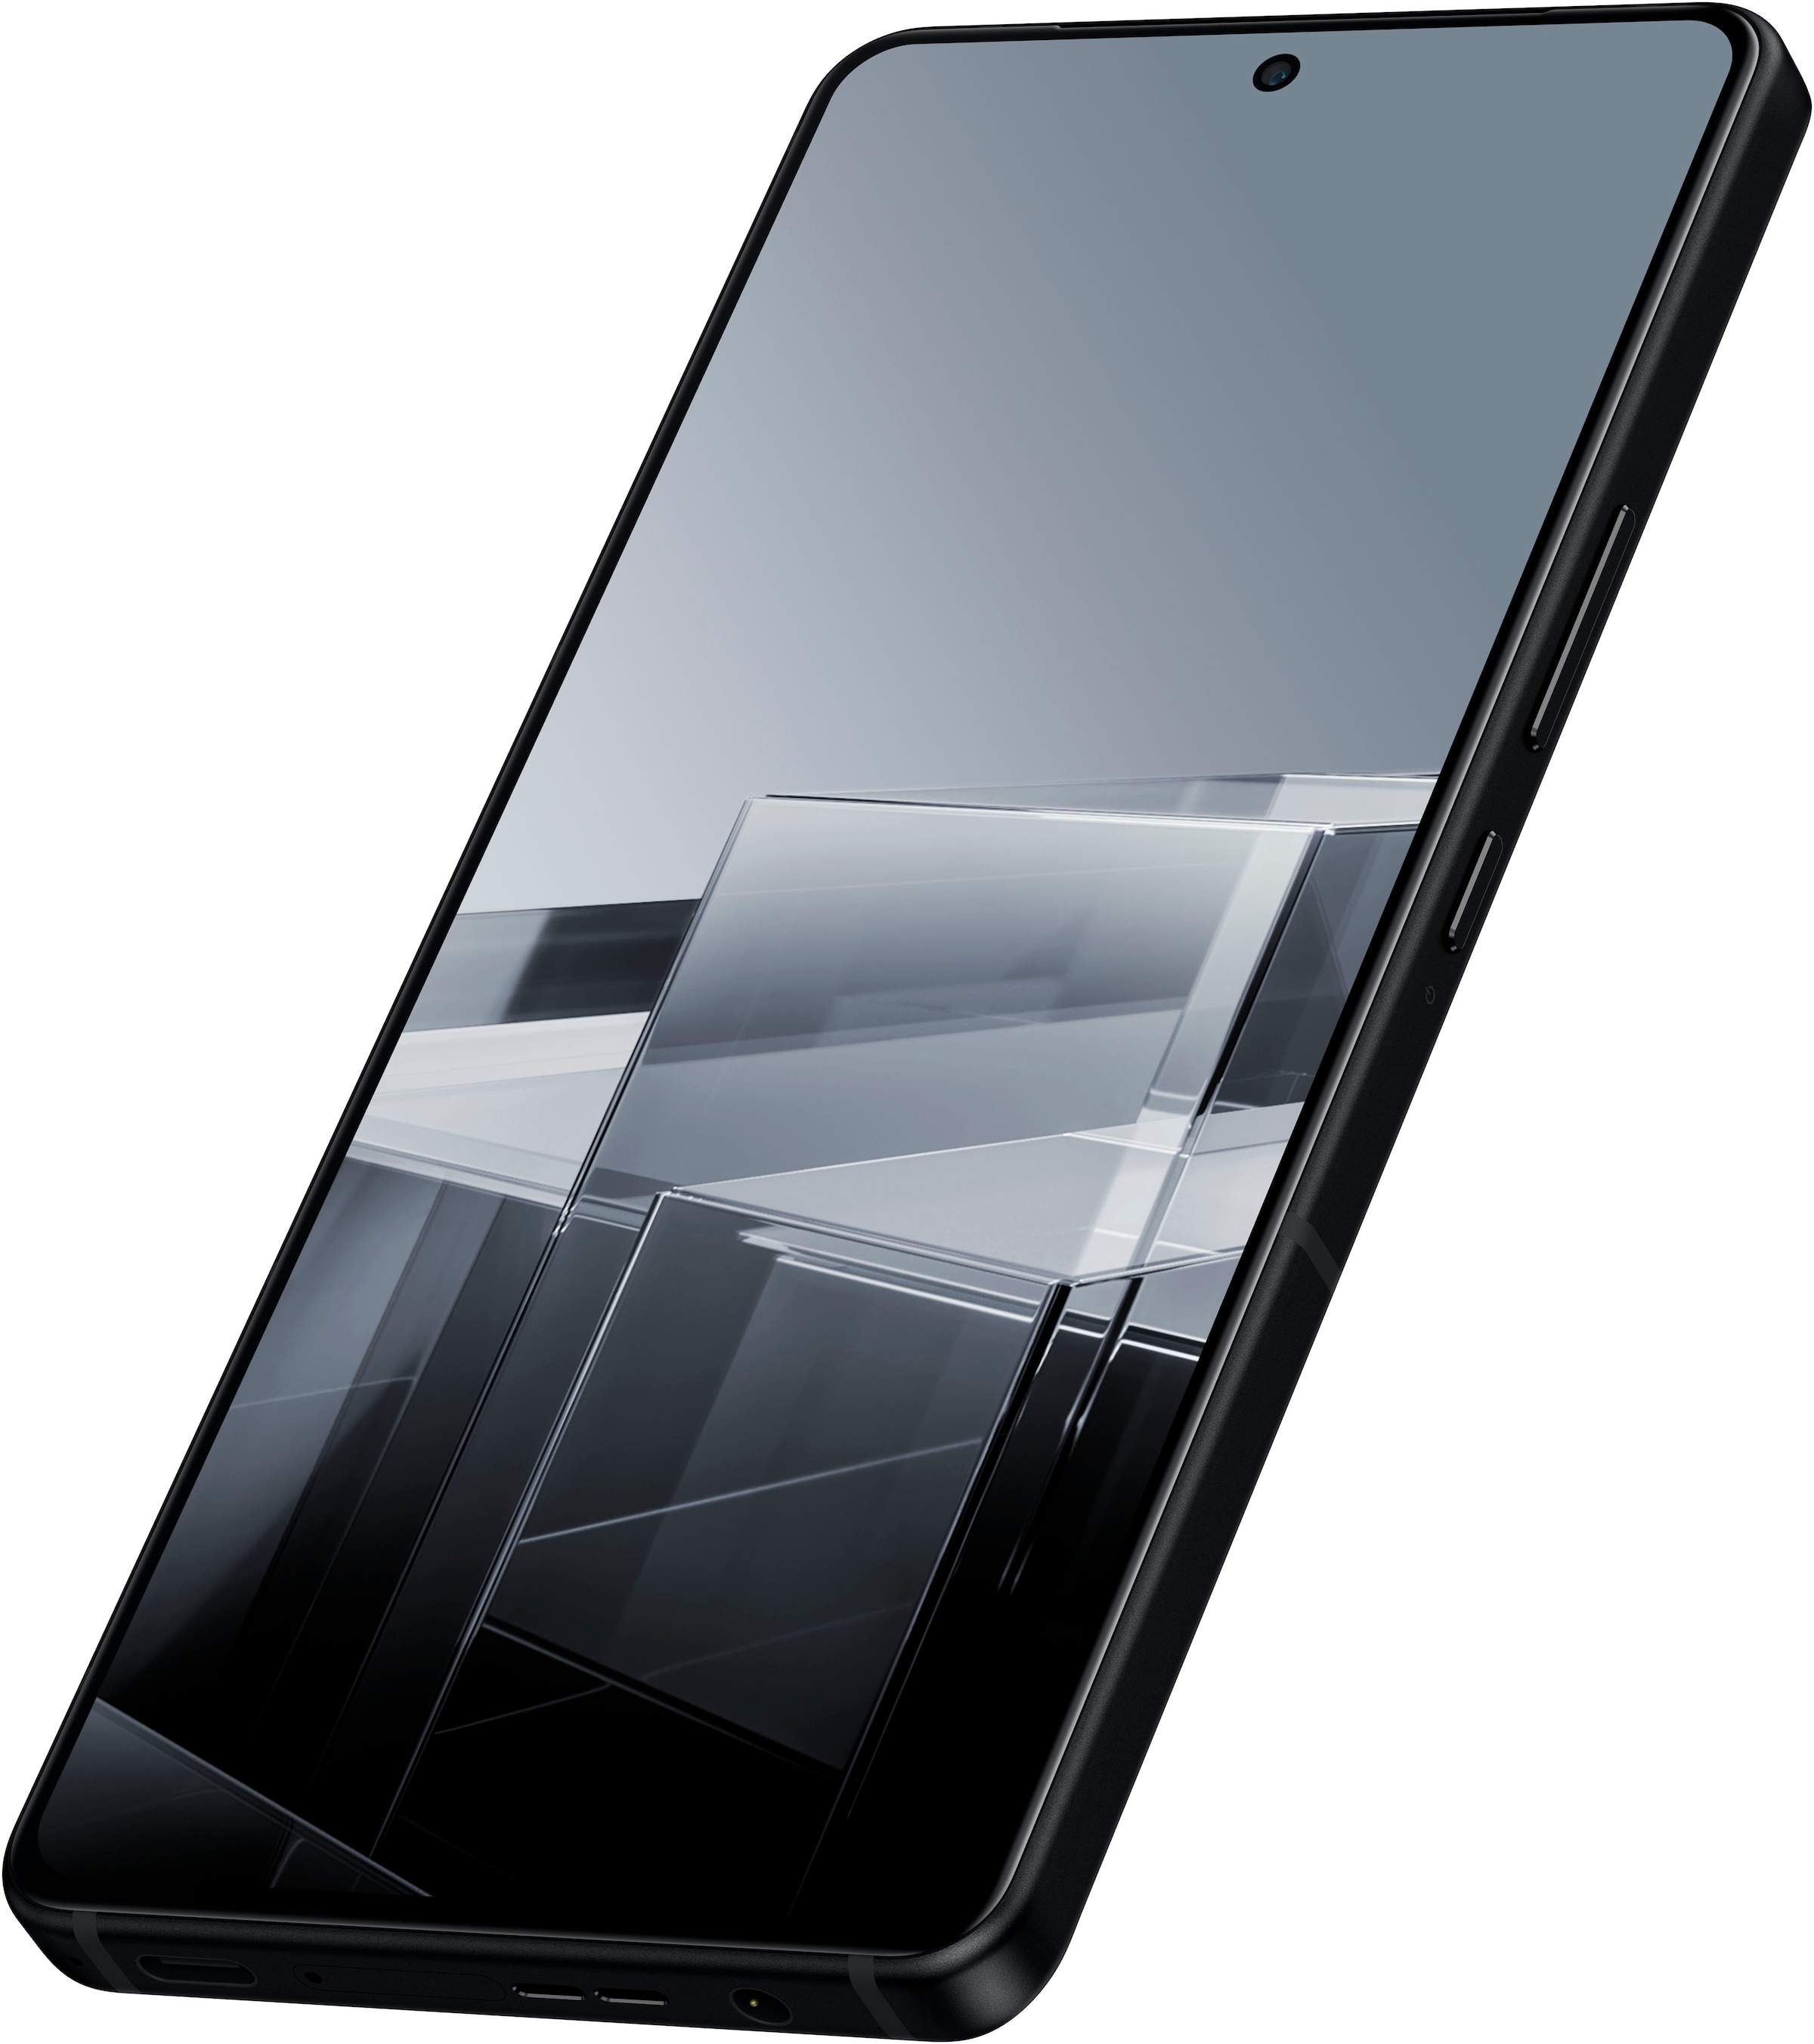 Asus Smartphone »Zenfone 11 Ultra 256 GB«, schwarz, 17,22 cm/6,78 Zoll, 256 GB Speicherplatz, 50 MP Kamera